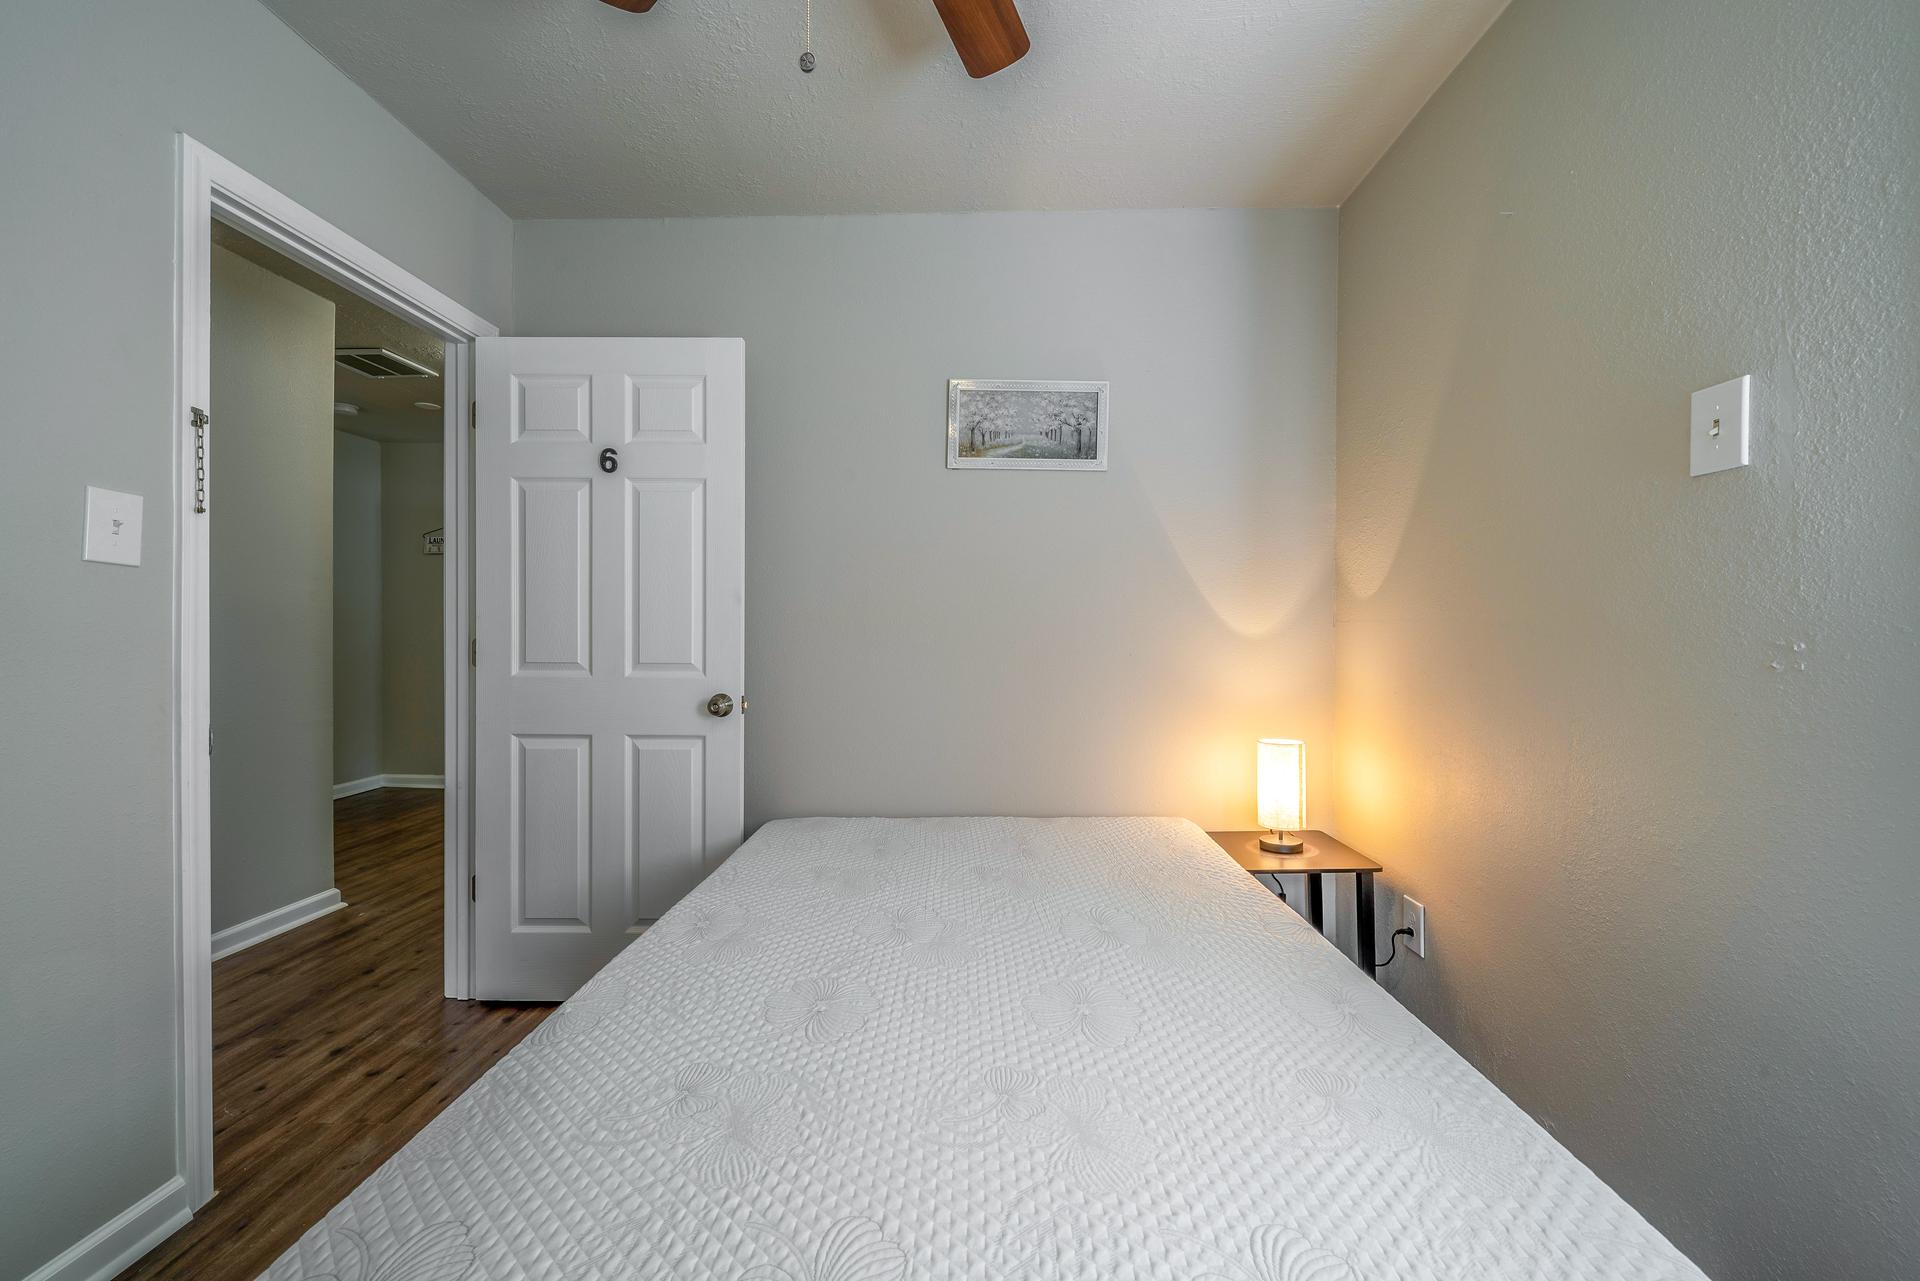 bedroom, detected: bed, ceiling fan